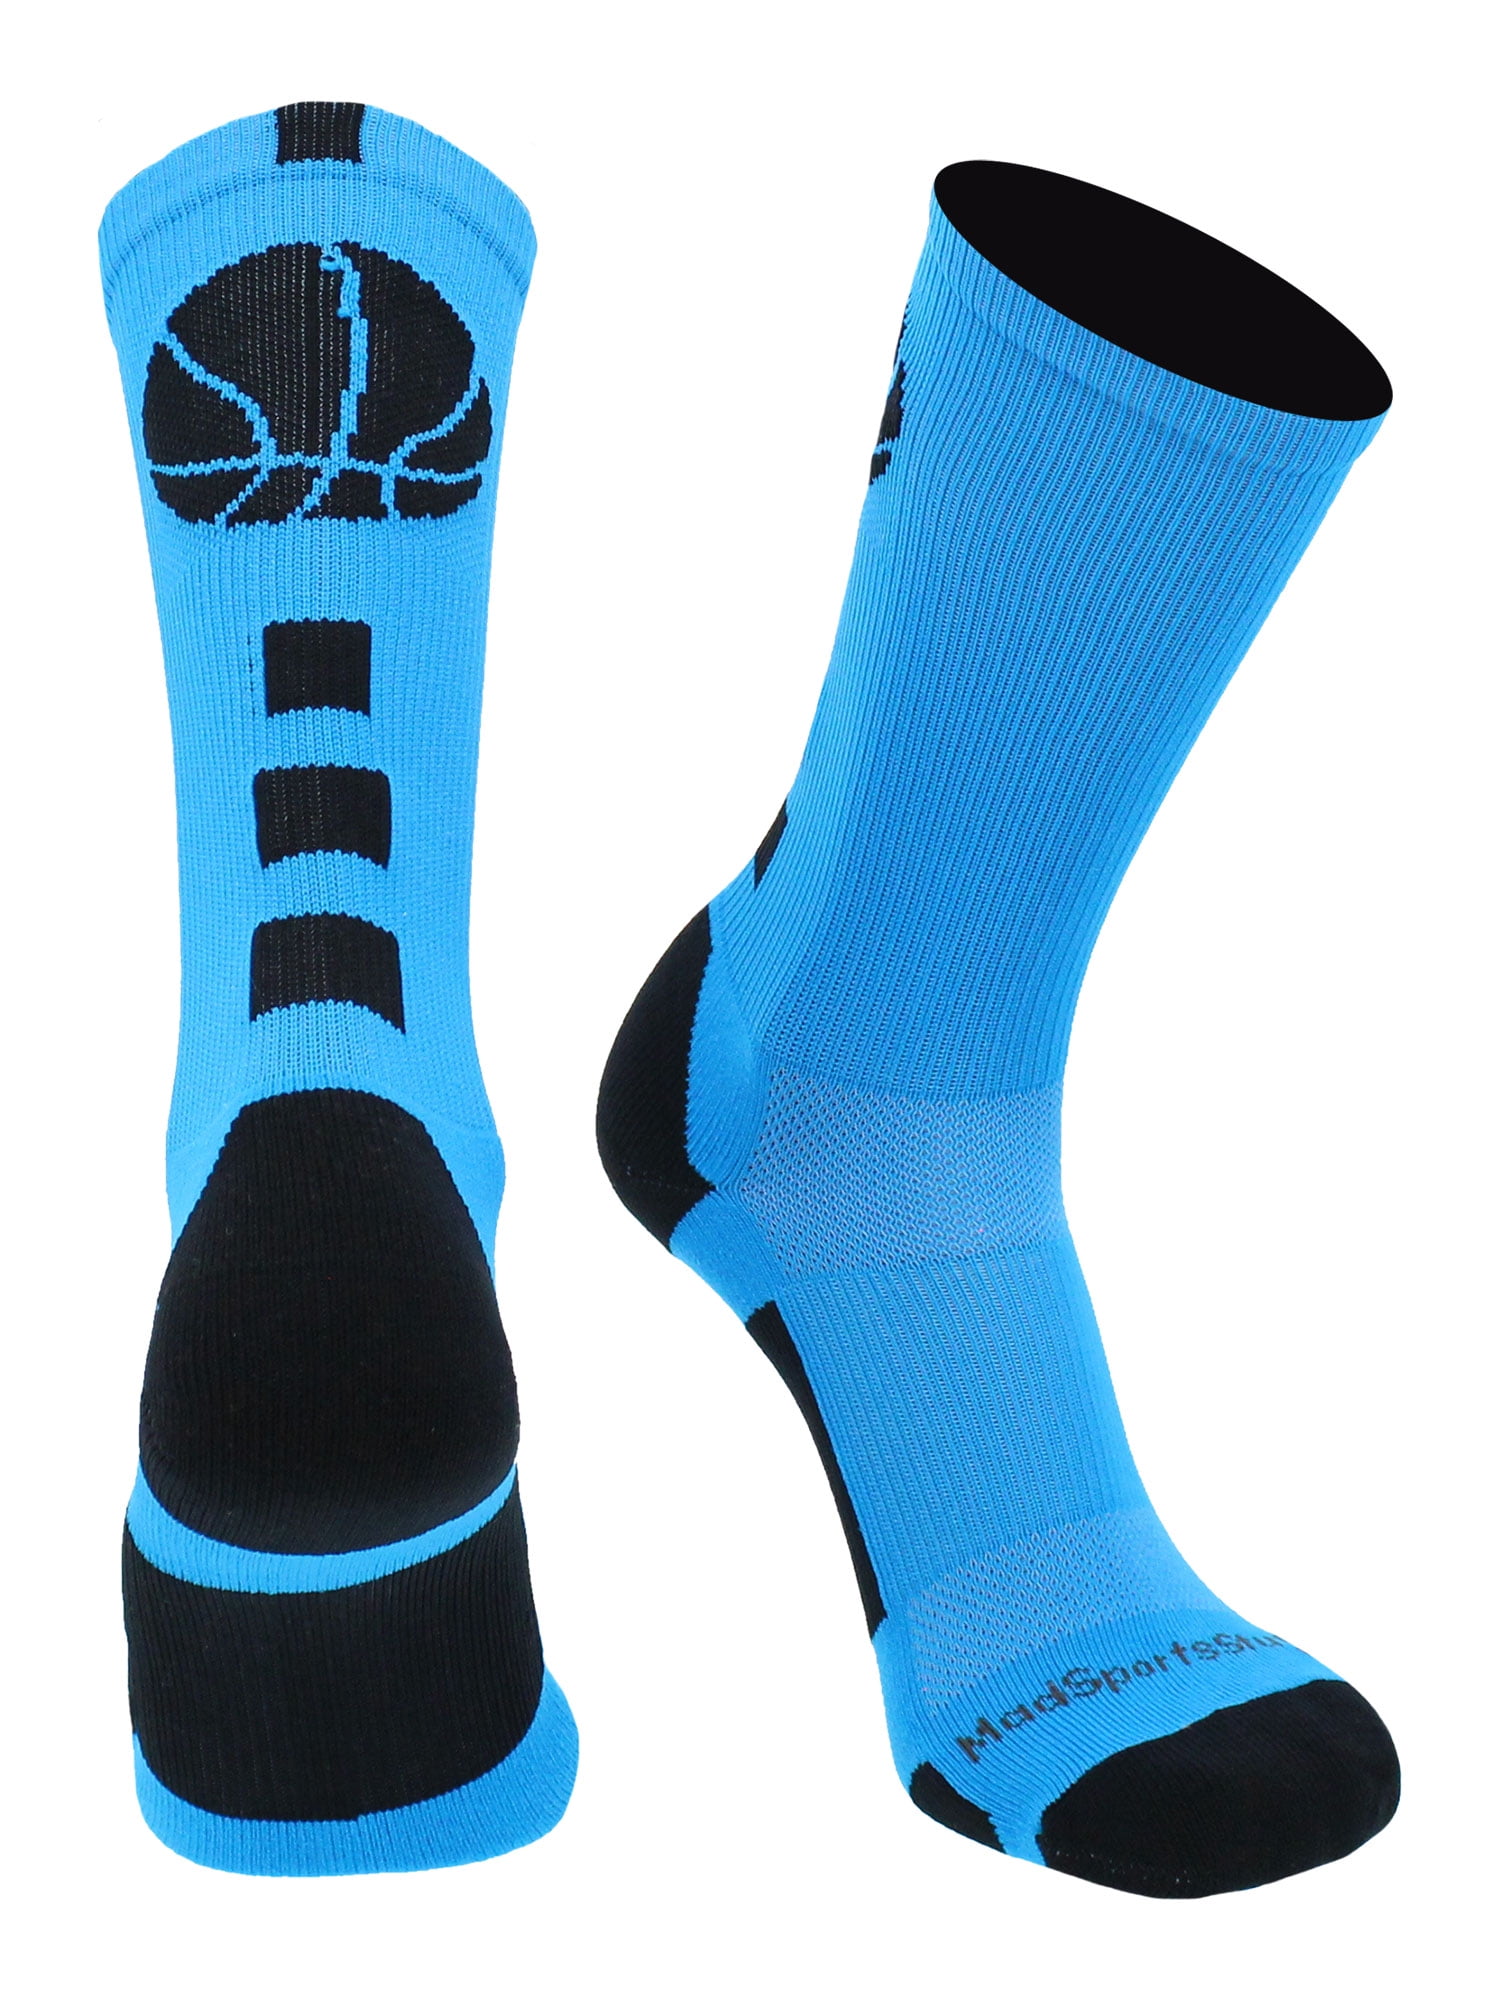 Nike Men's KD Elite Crew Basketball Socks ((L) Large)